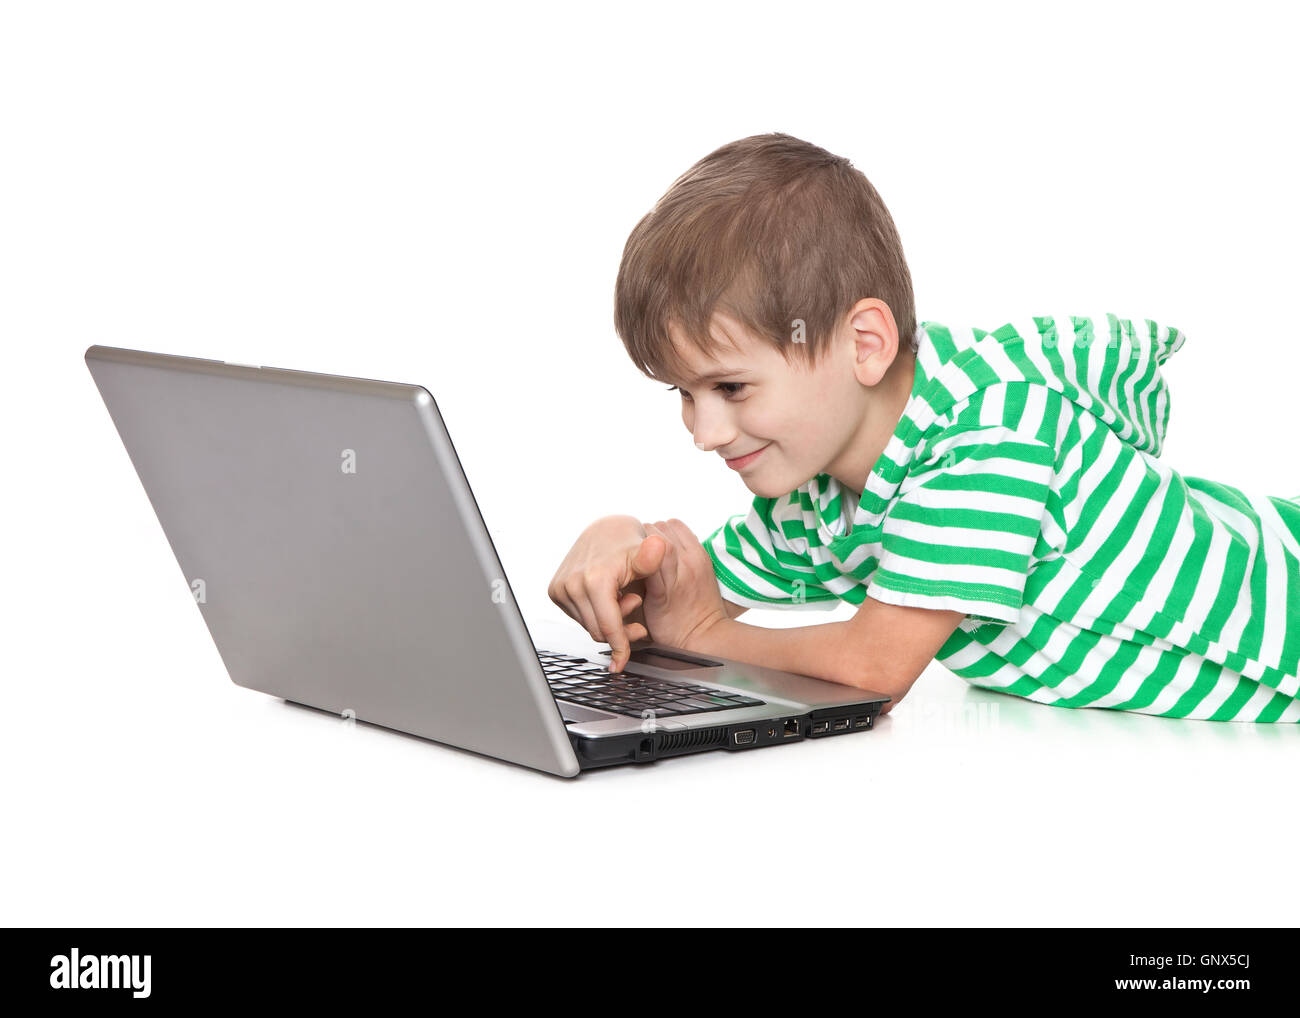 Boy holding a laptop Stock Photo